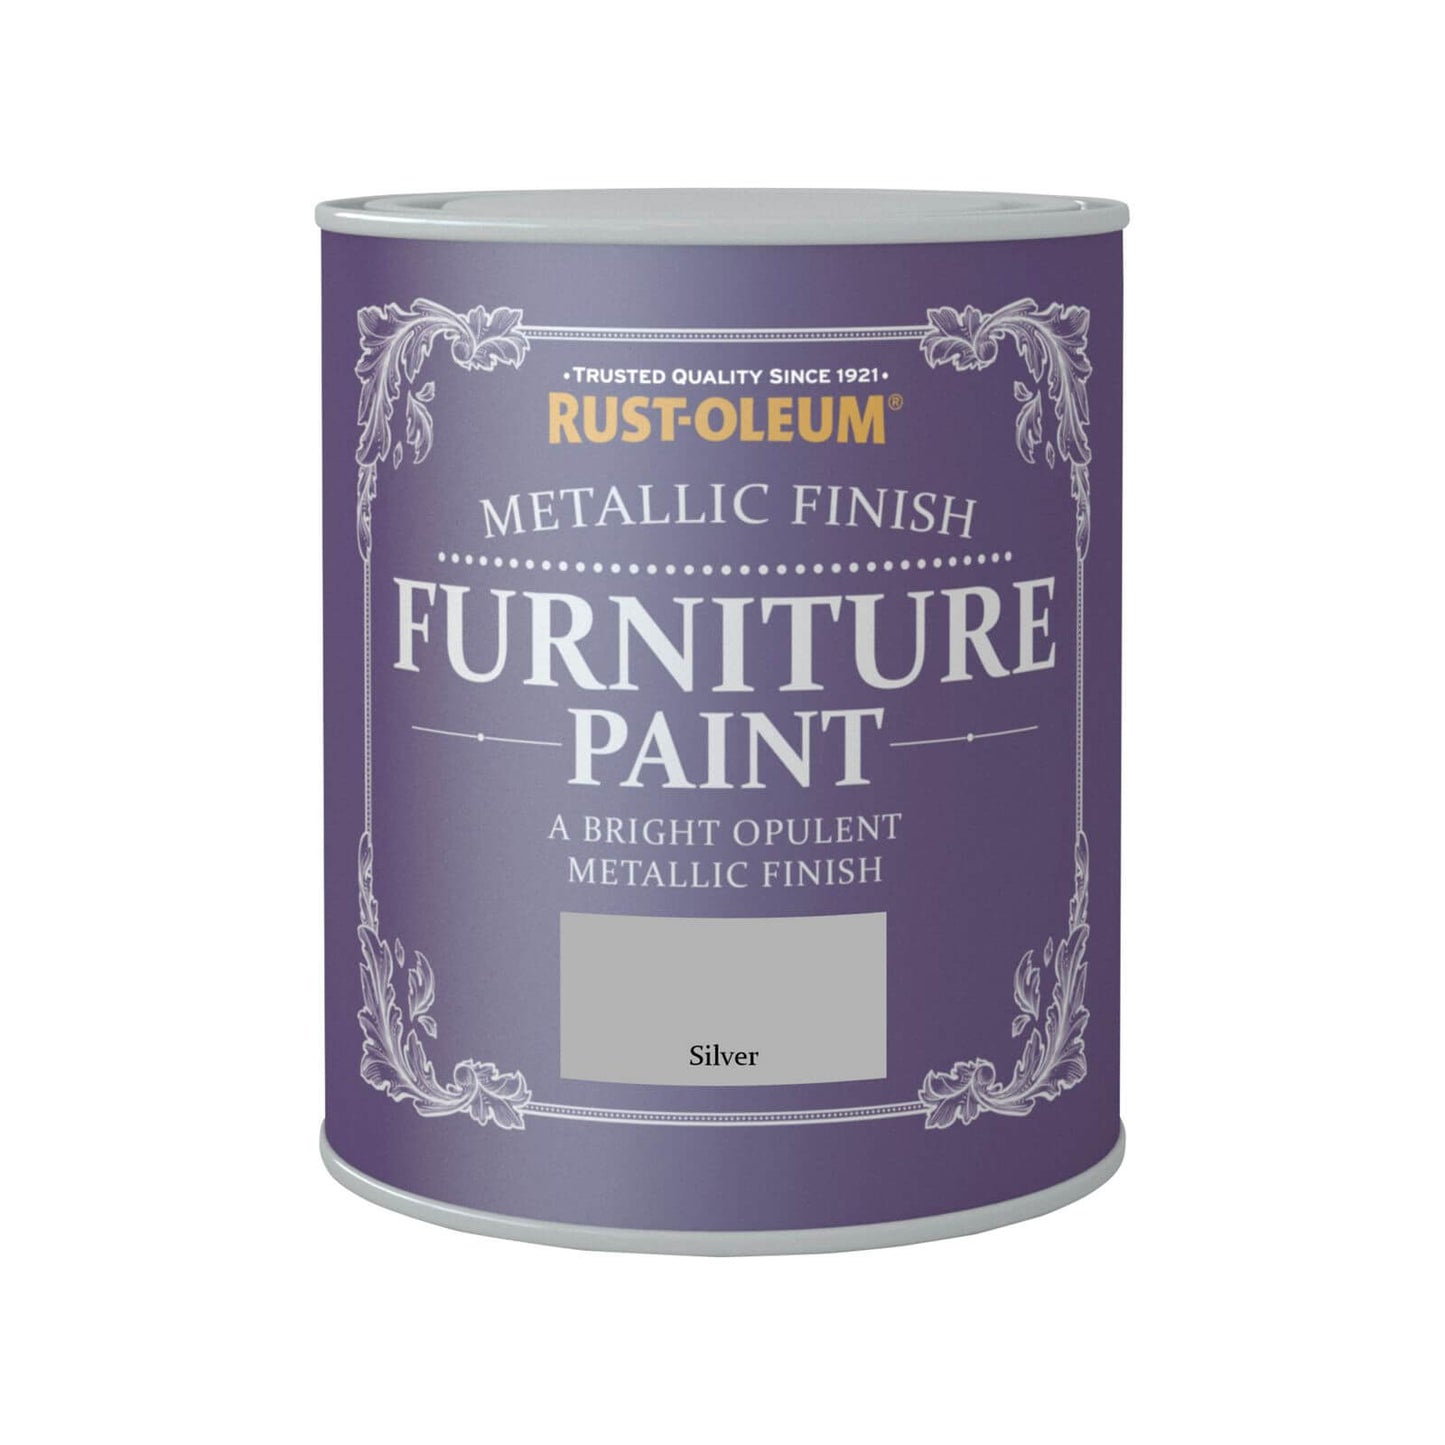 Rust-Oleum Metallic Finish Furniture Paint Silver